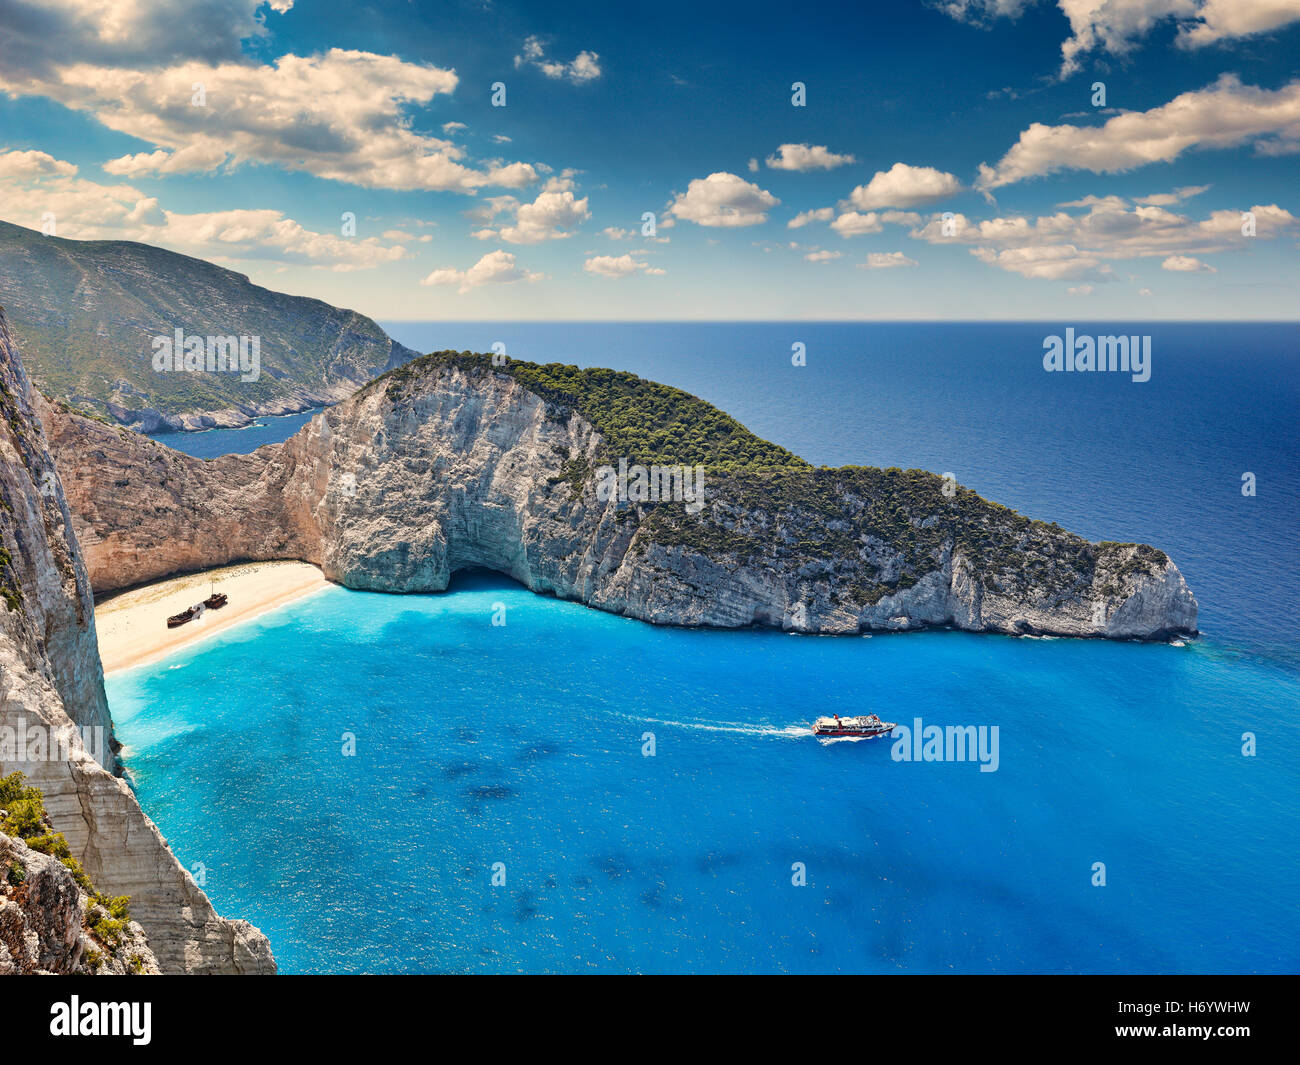 The famous Navagio (shipwreck) in Zakynthos island, Greece Stock Photo